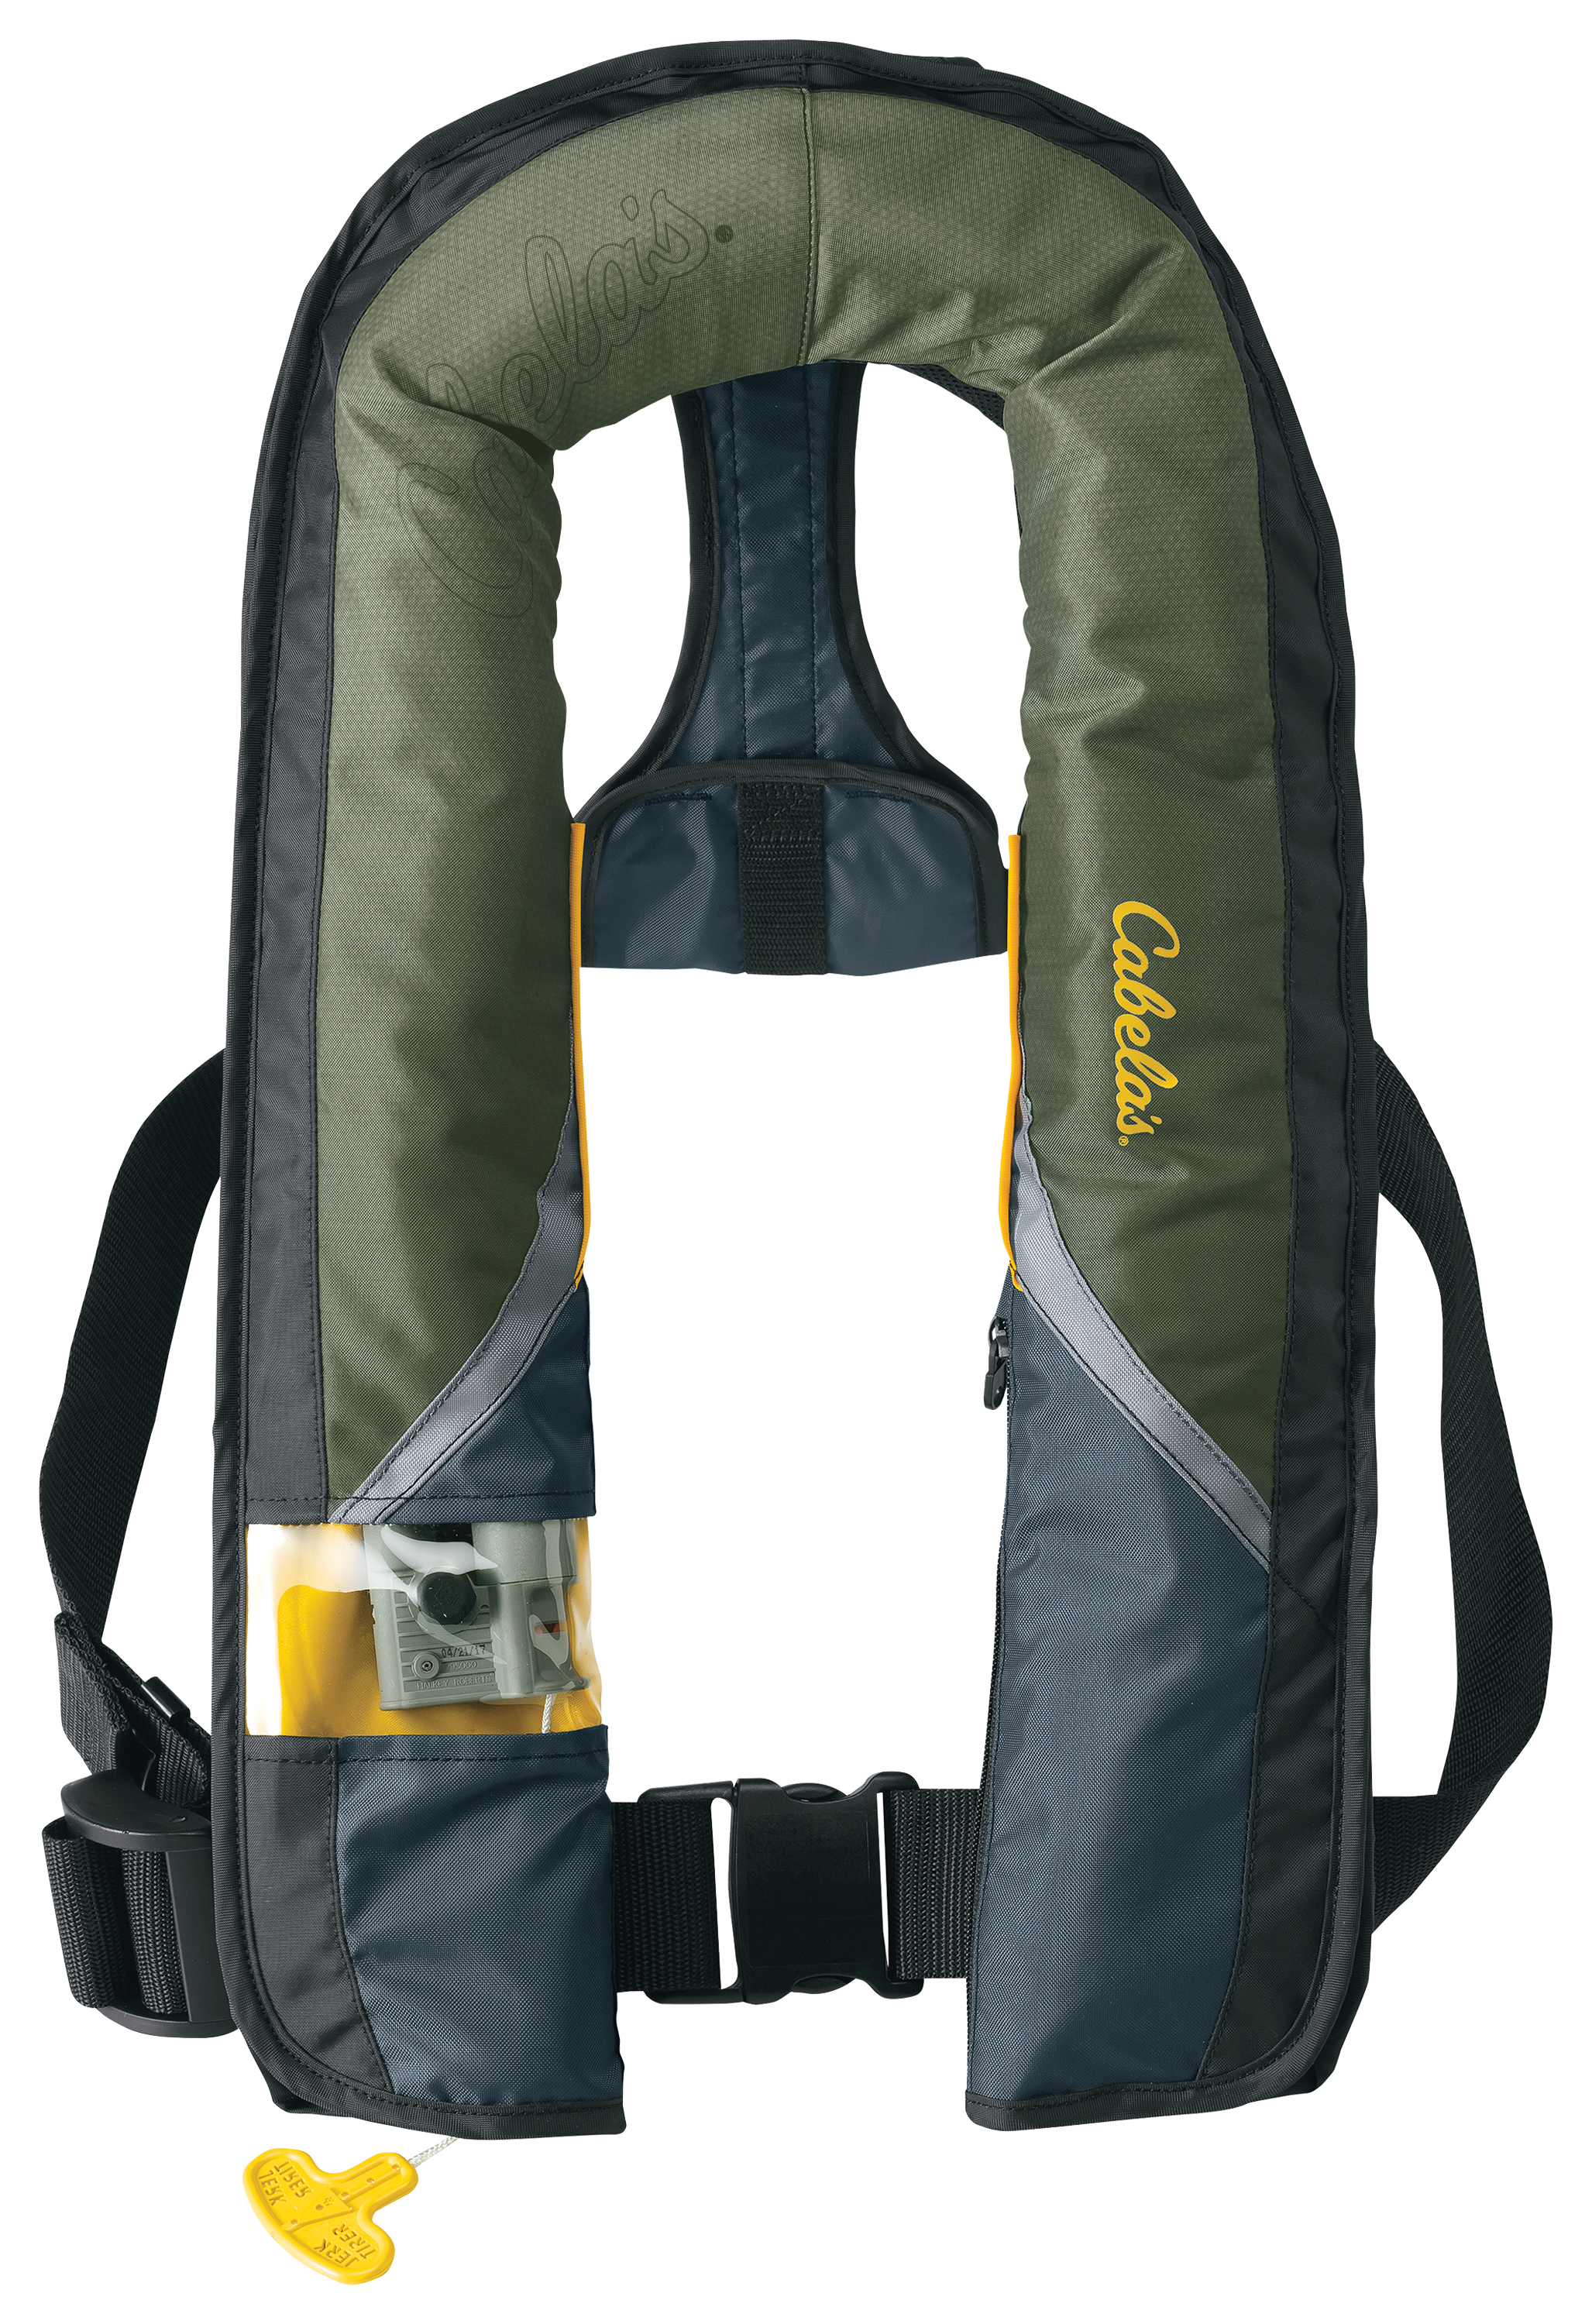 Cabela's CO2 Inflatable Life Vest PFD Fishing Boating jacket